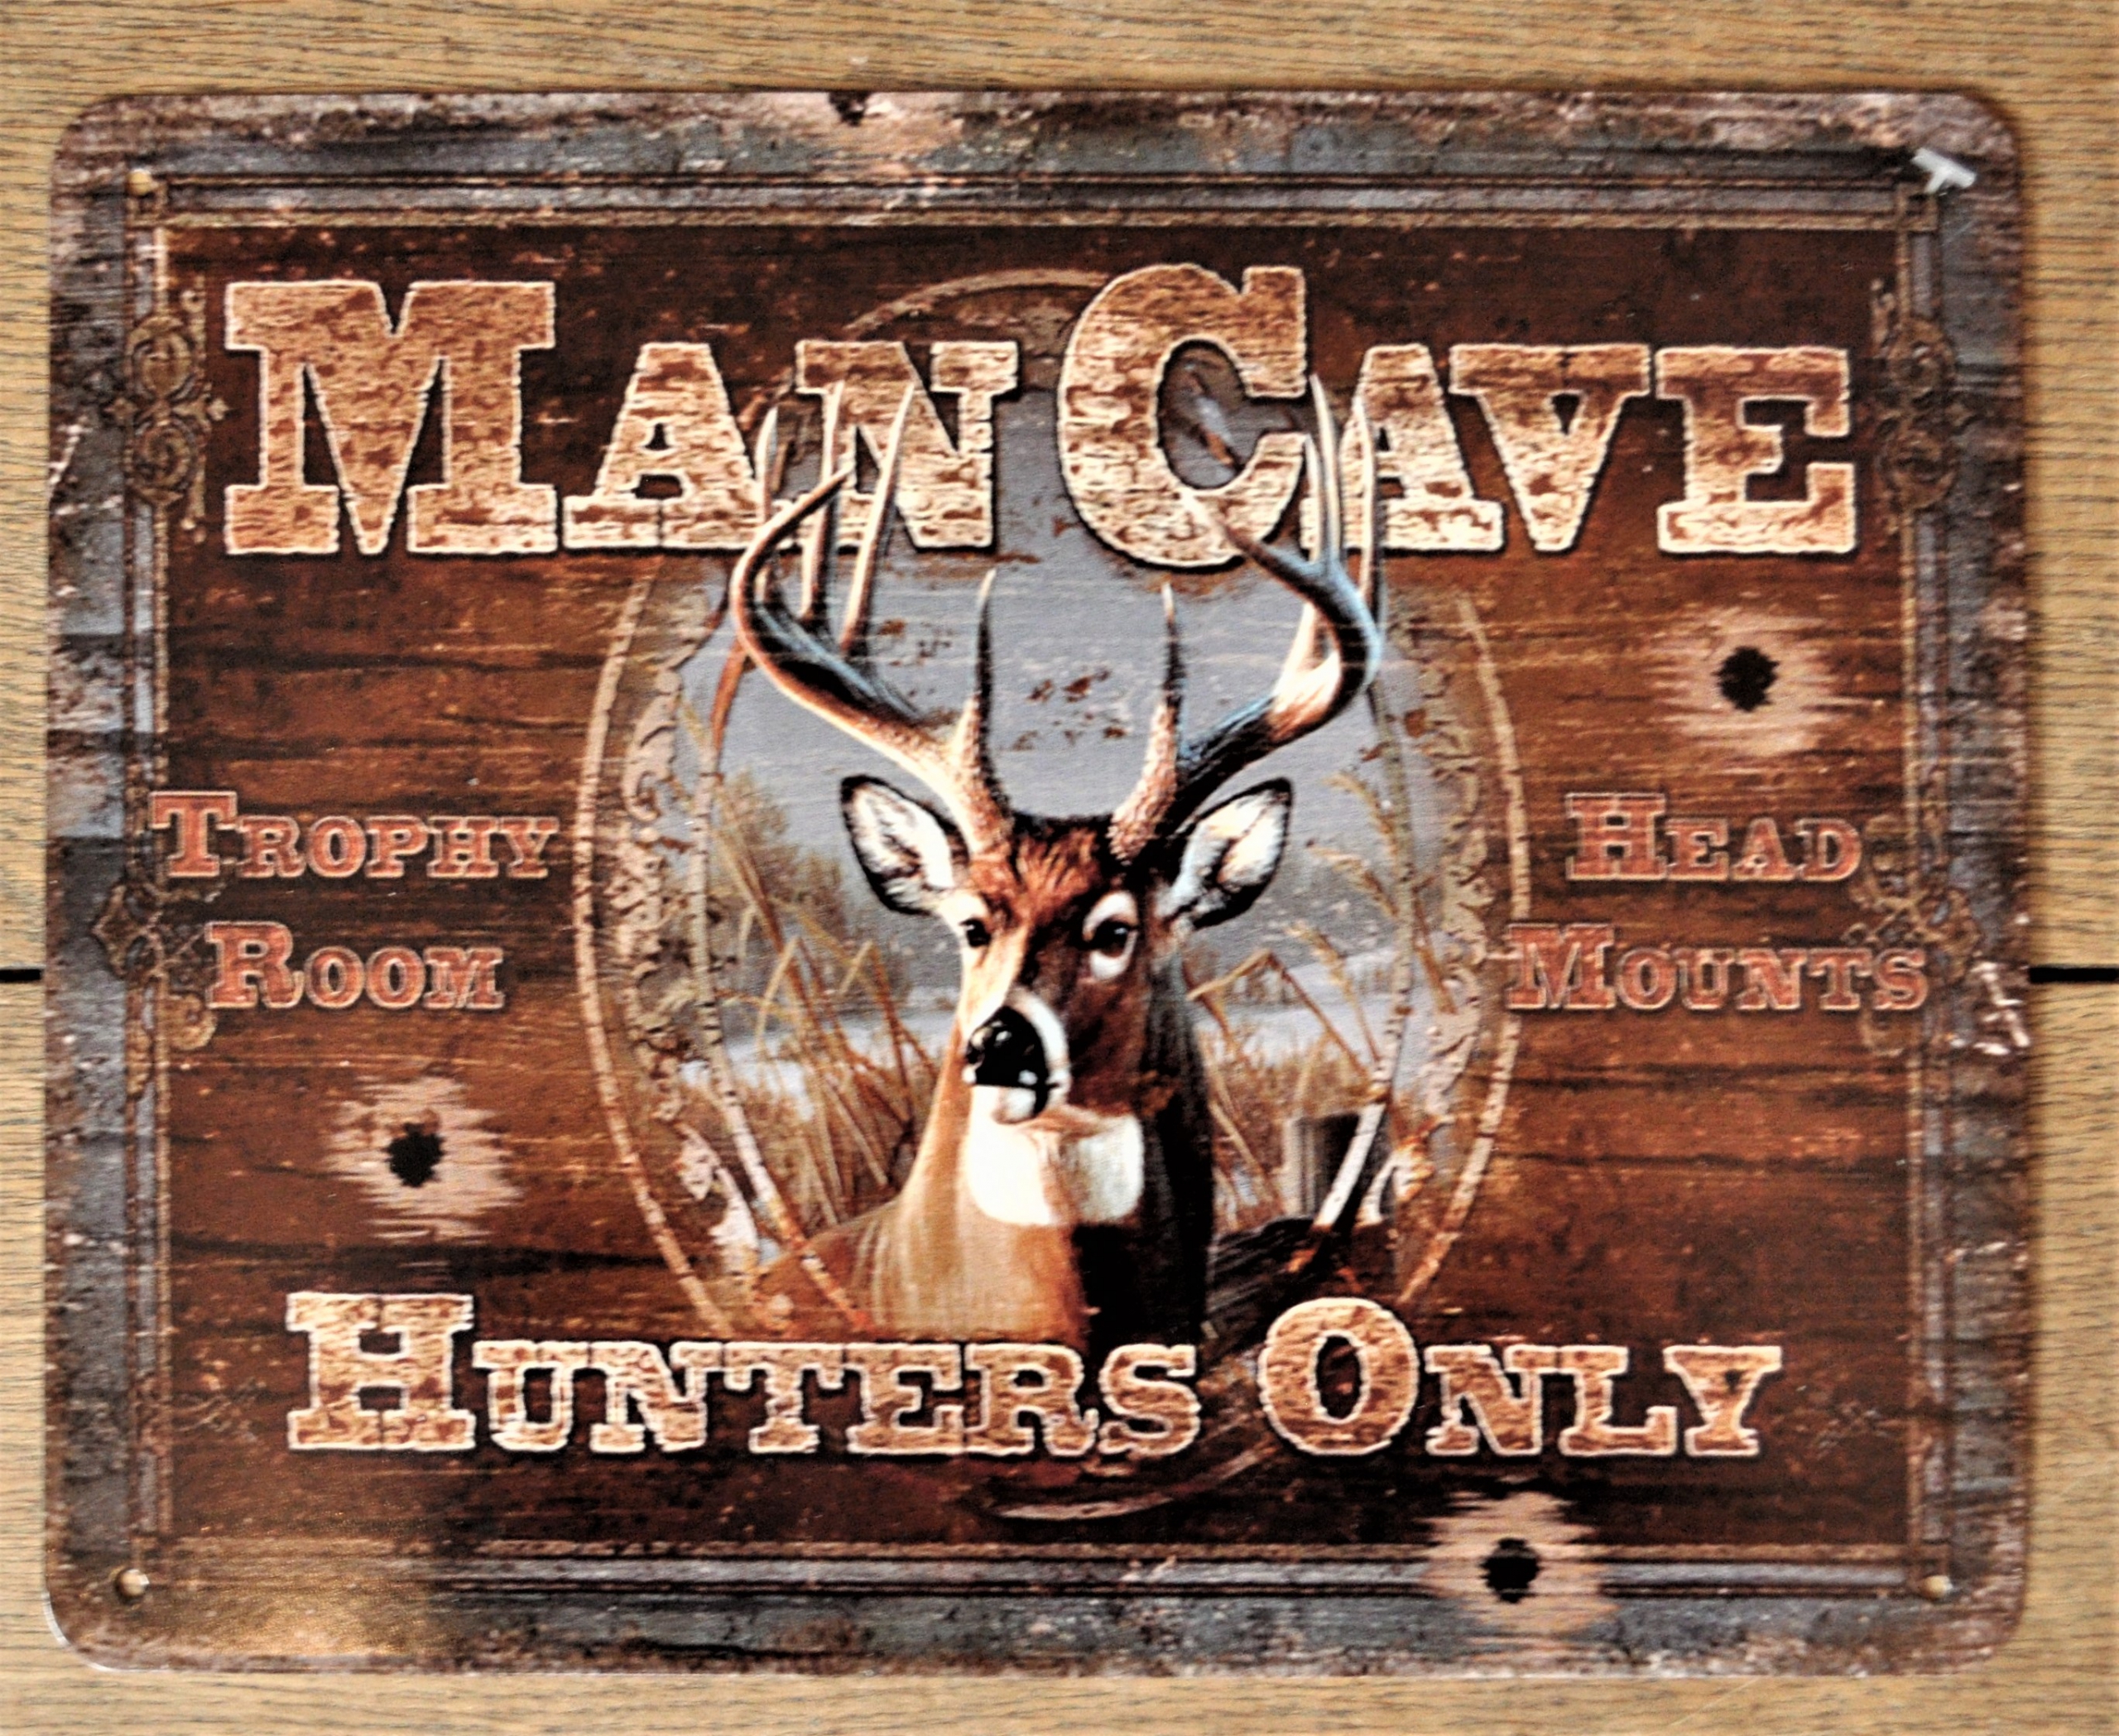 : Mancave Hunters only - Elmo Dreams & Deco